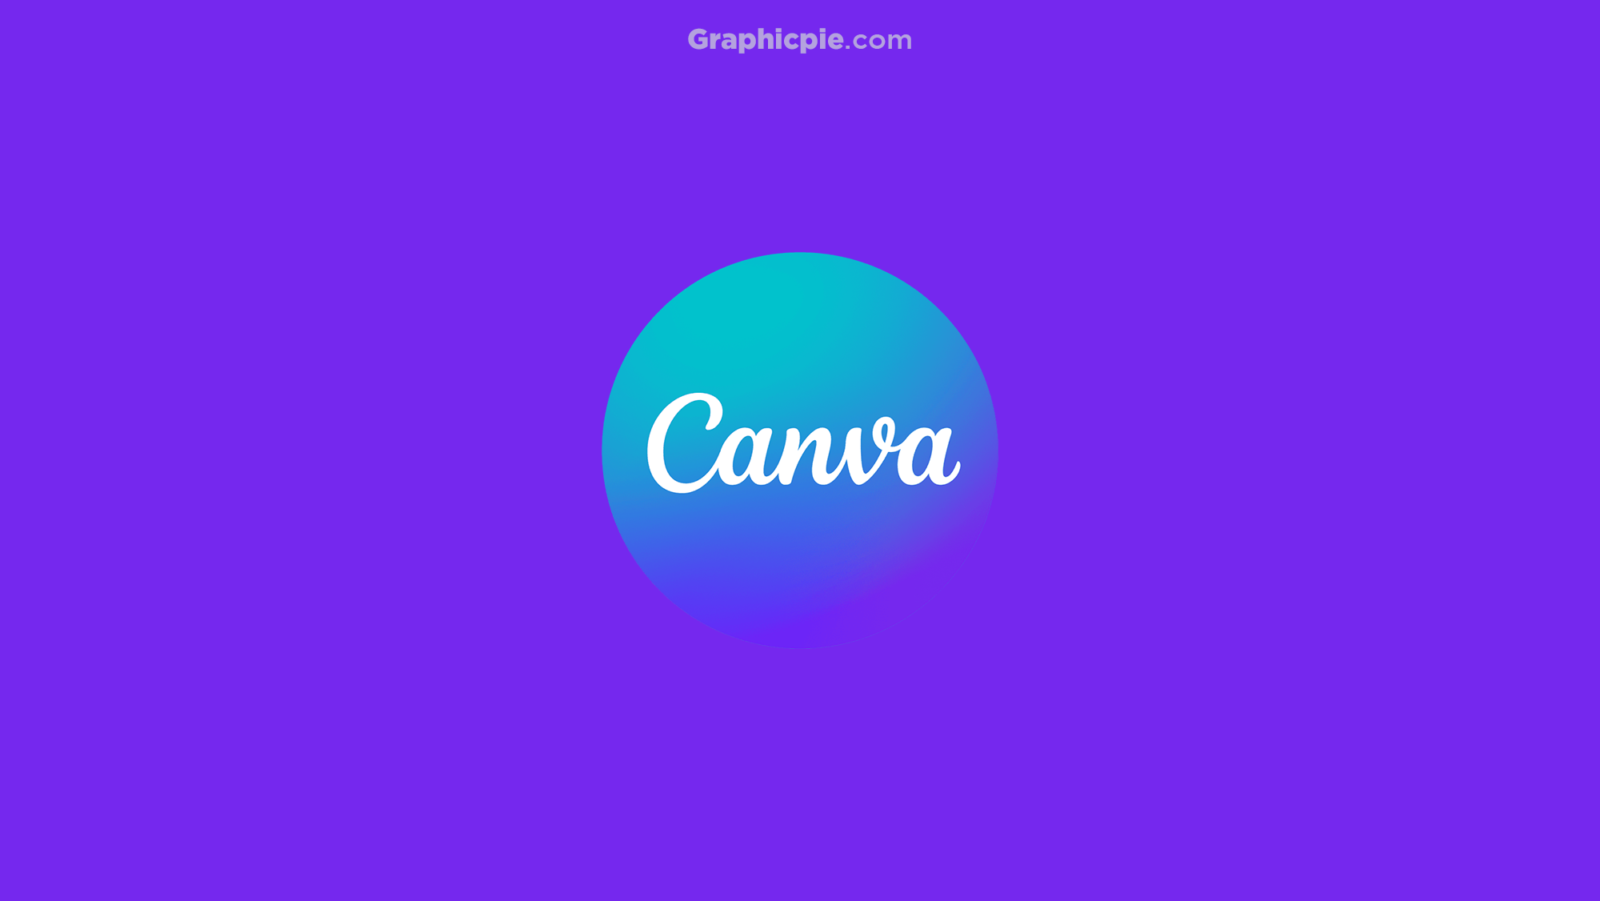 cute-aesthetic-canva-slides-templates-graphic-pie